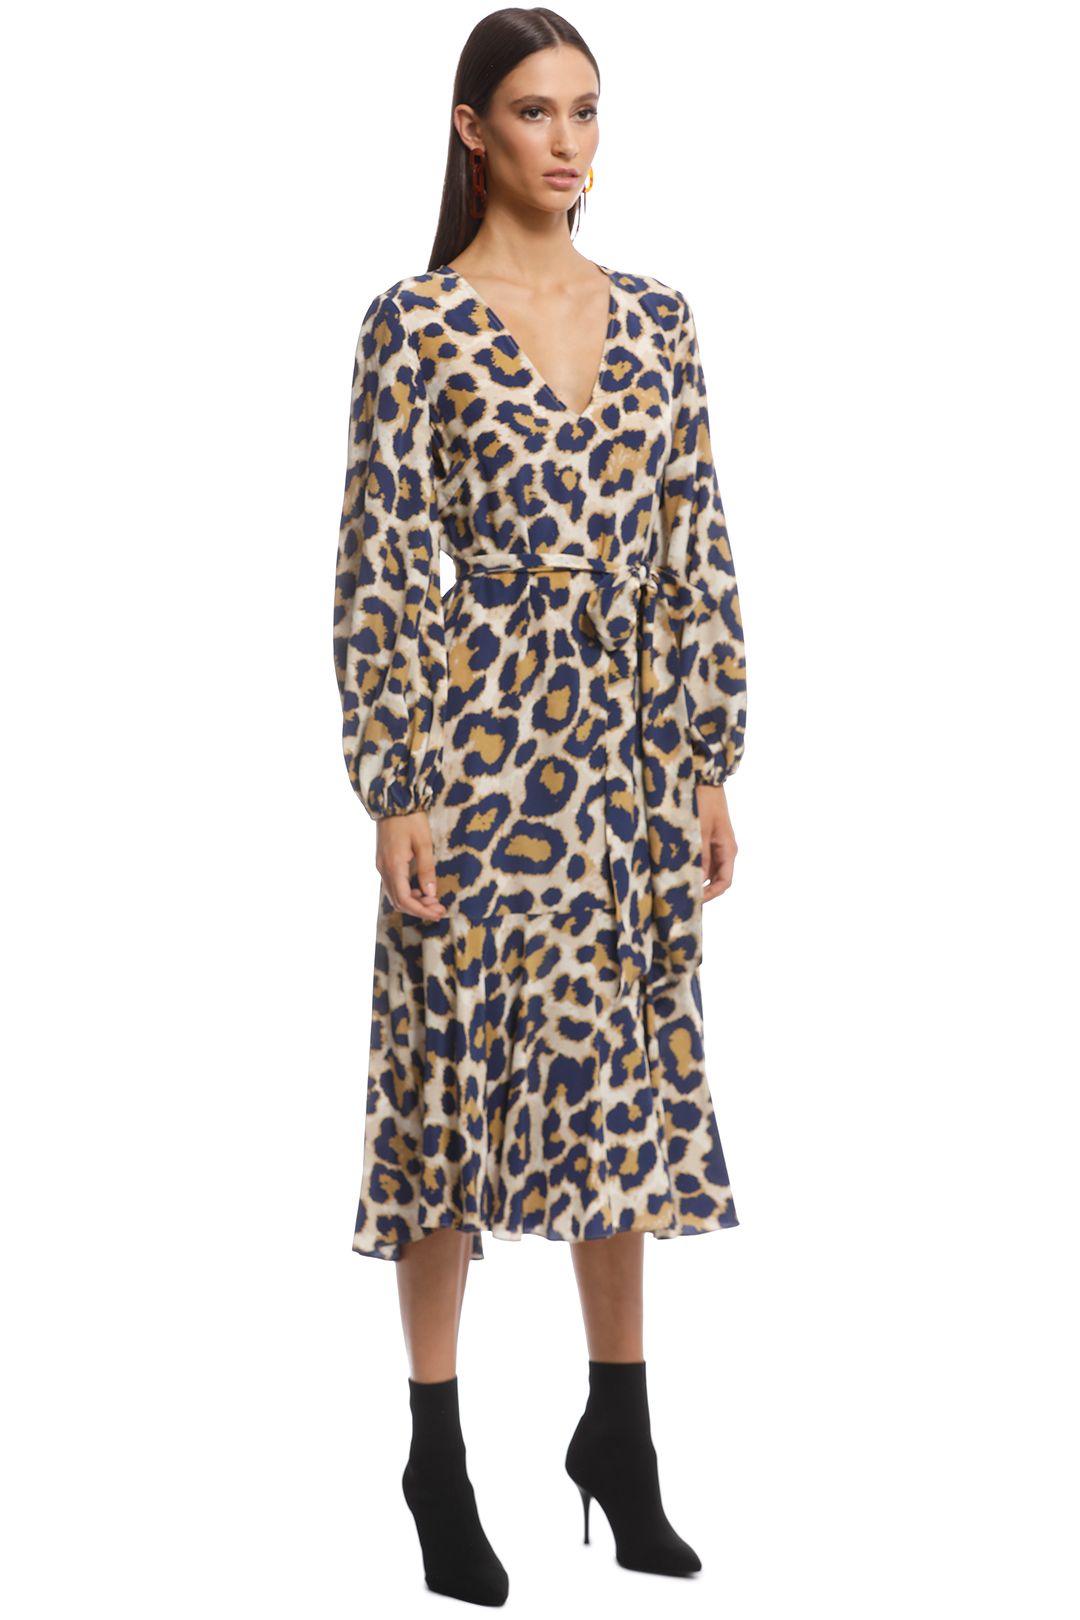 Husk - Talitha Dress - Leopard - Side